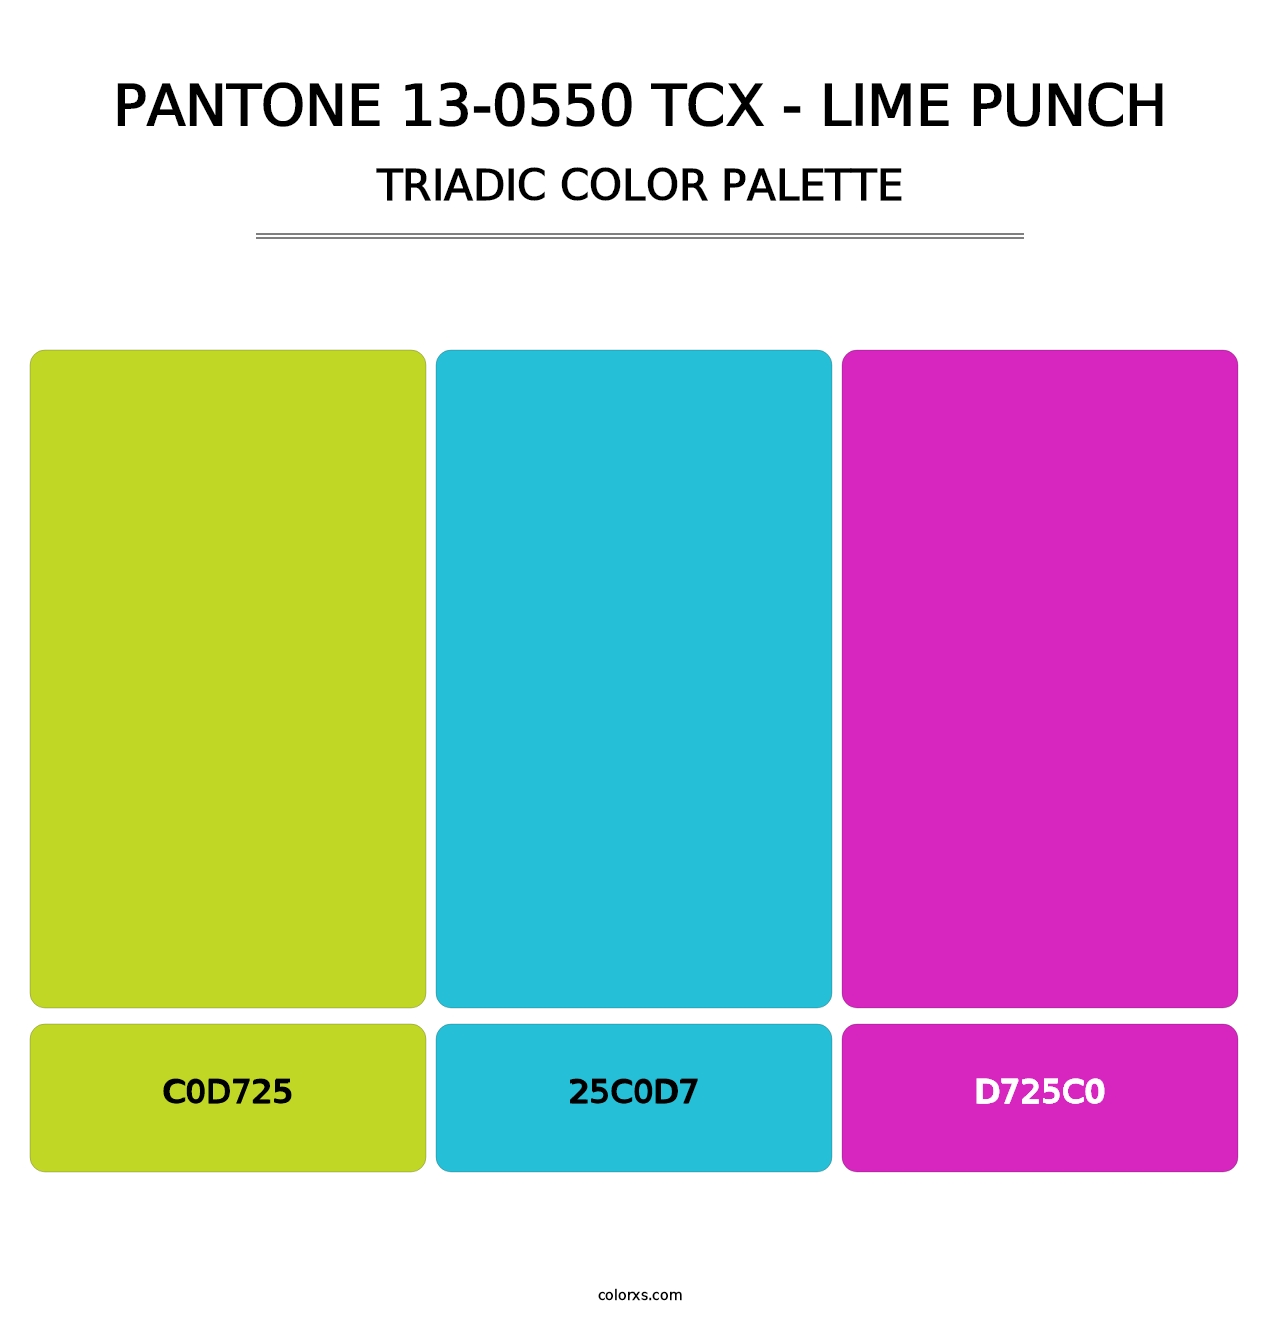 PANTONE 13-0550 TCX - Lime Punch - Triadic Color Palette